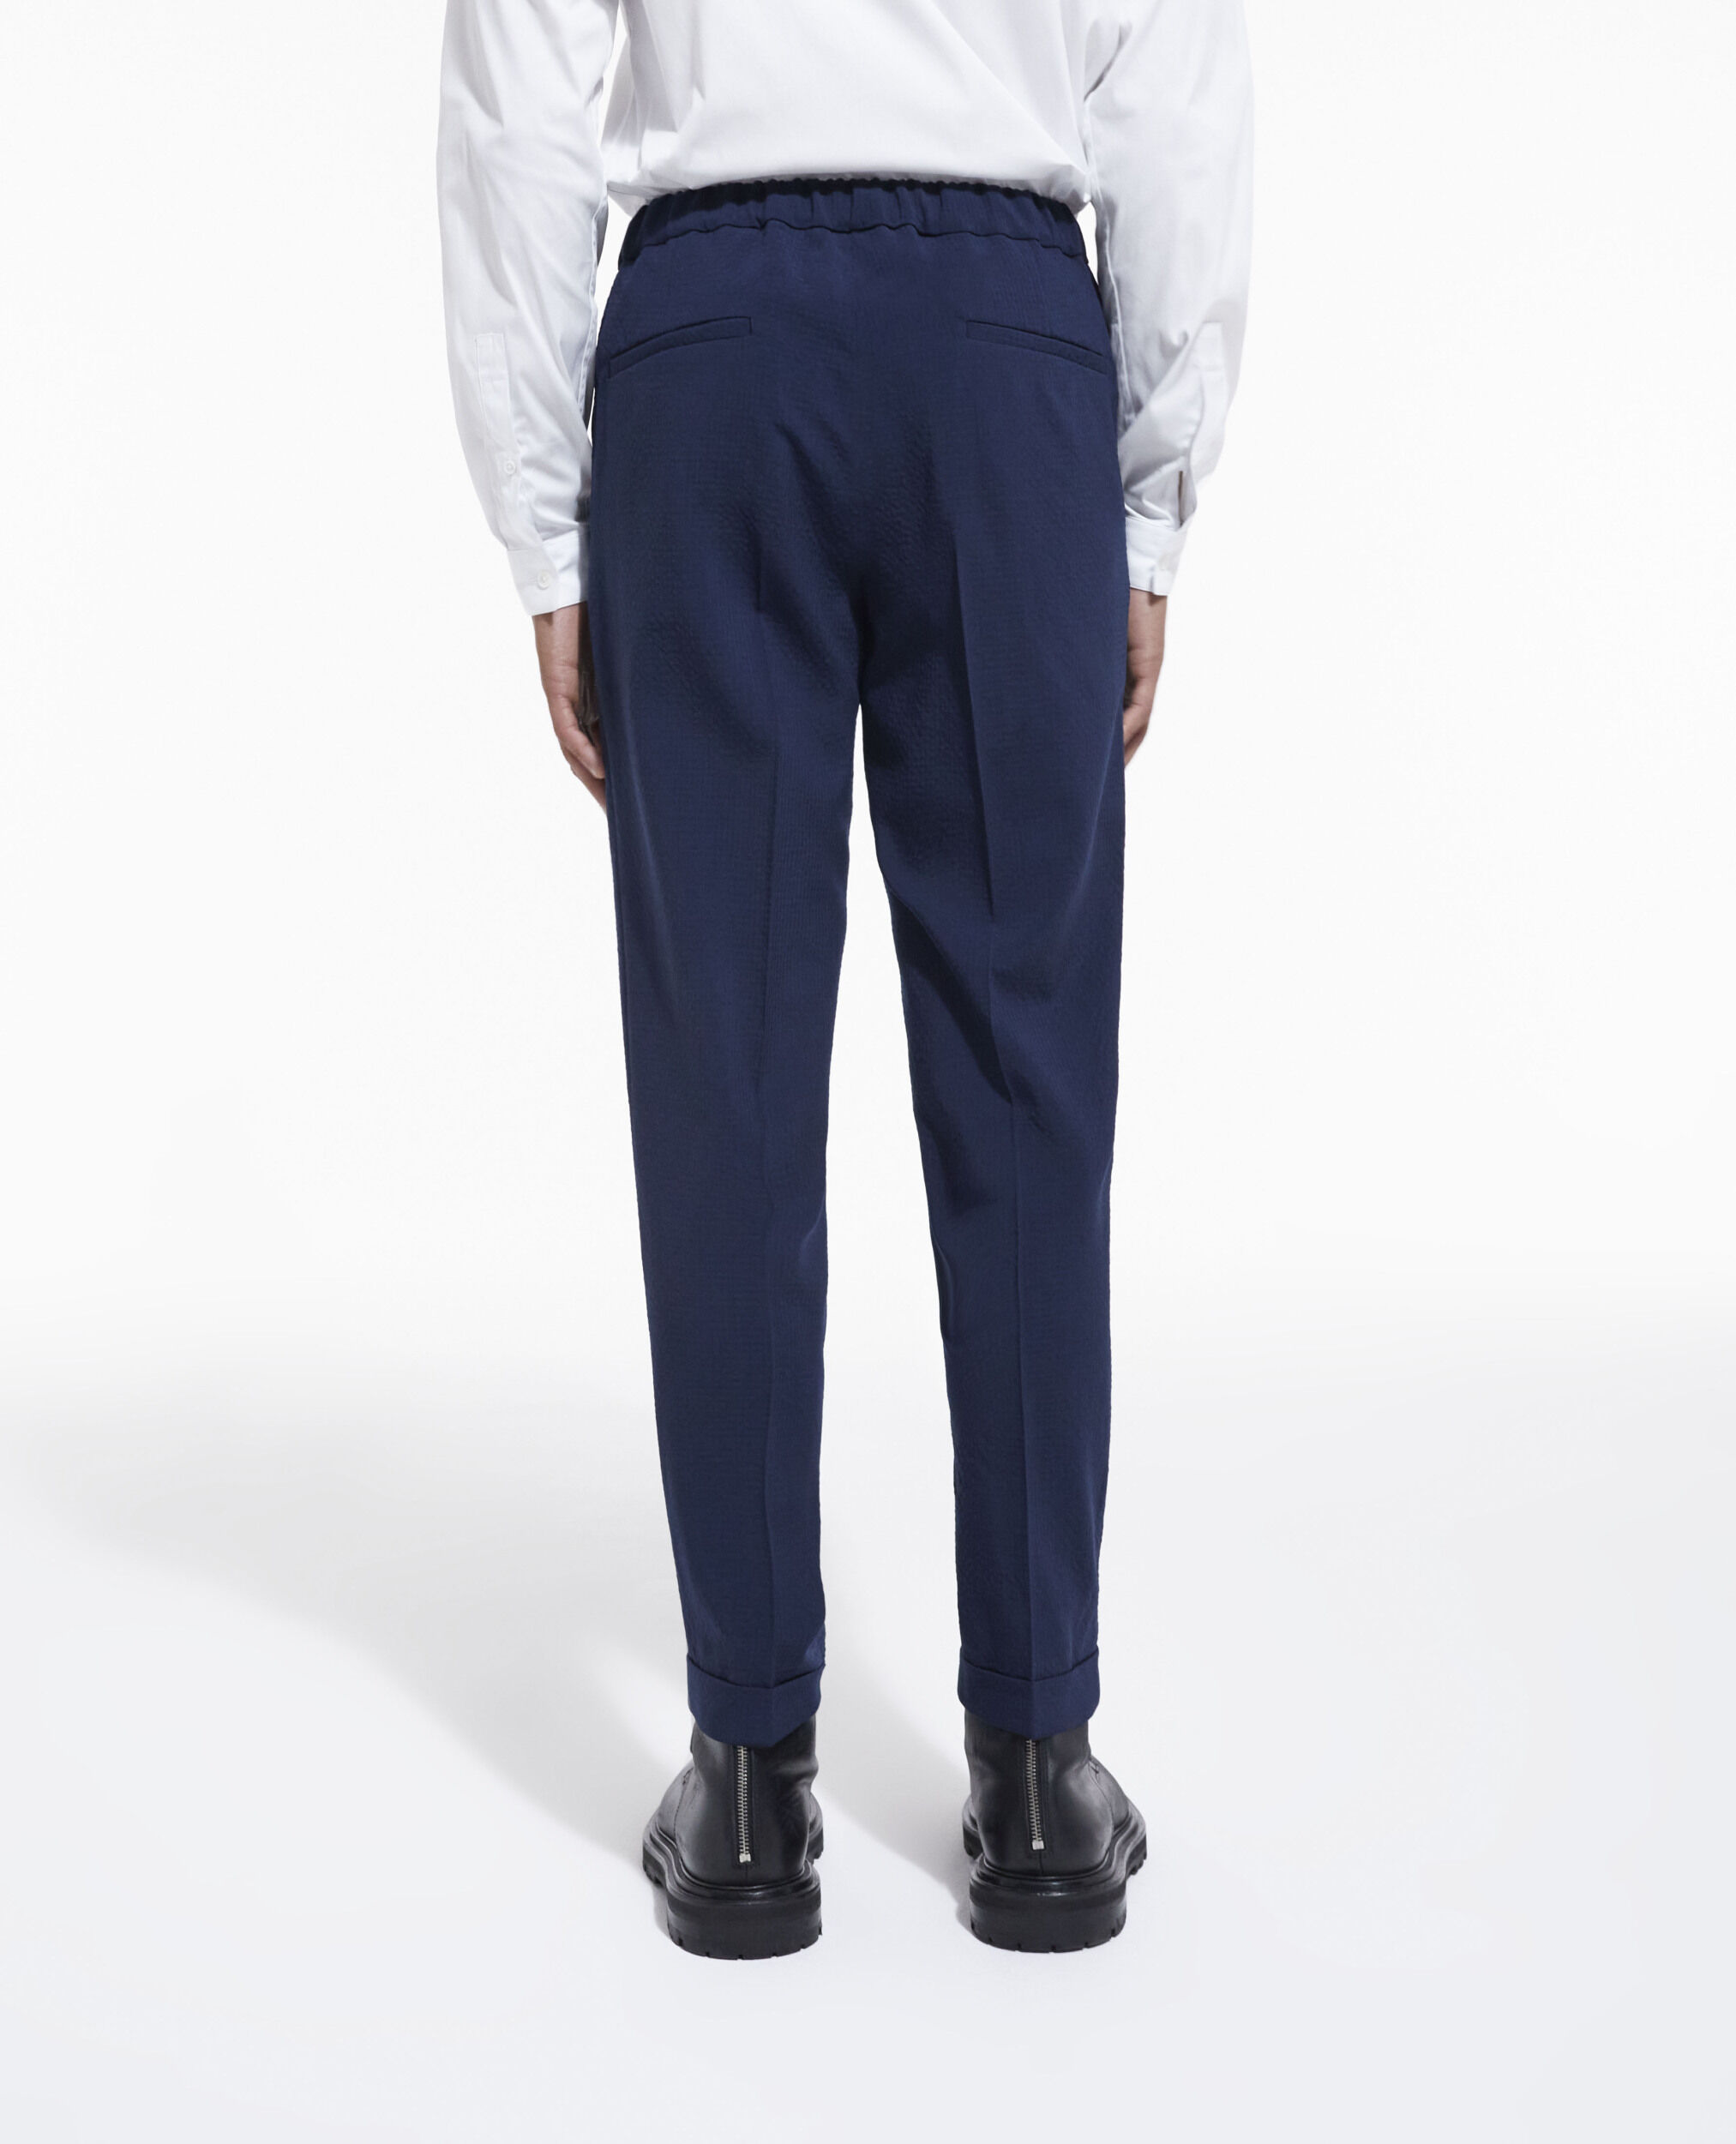 Pantalón traje azul marino lana pliegues, NAVY, hi-res image number null